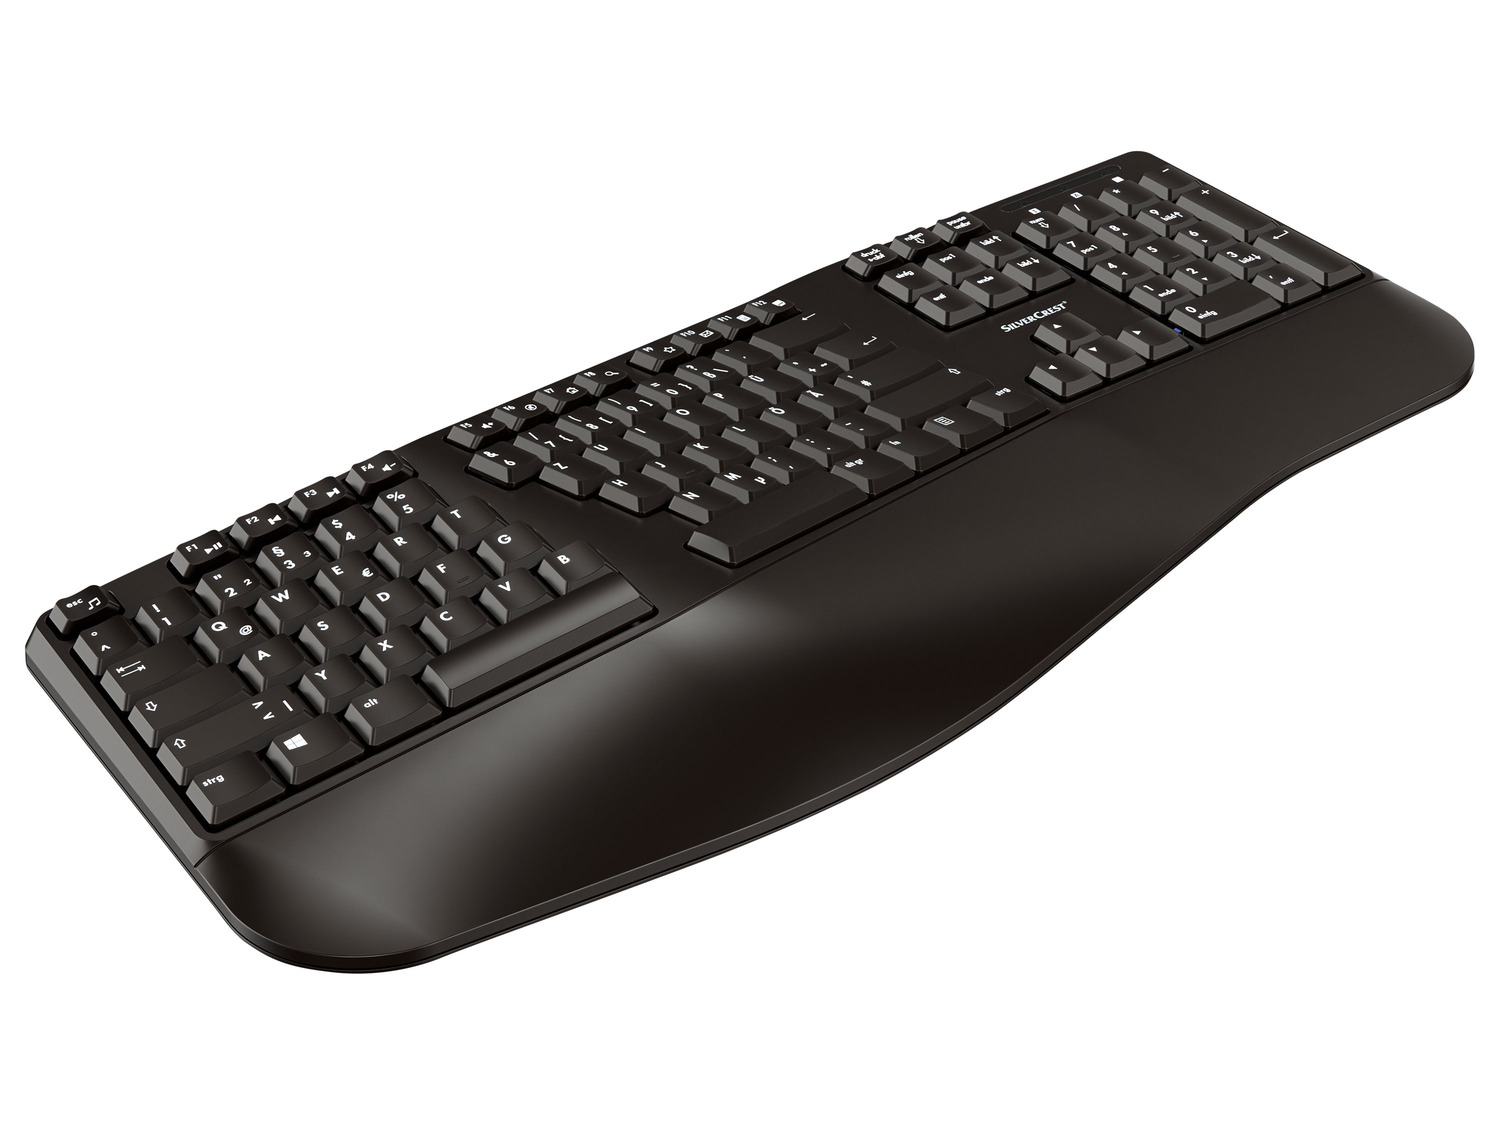 SILVERCREST® PC Tastatur »SPC KE500 A1«, ergonomisch, …